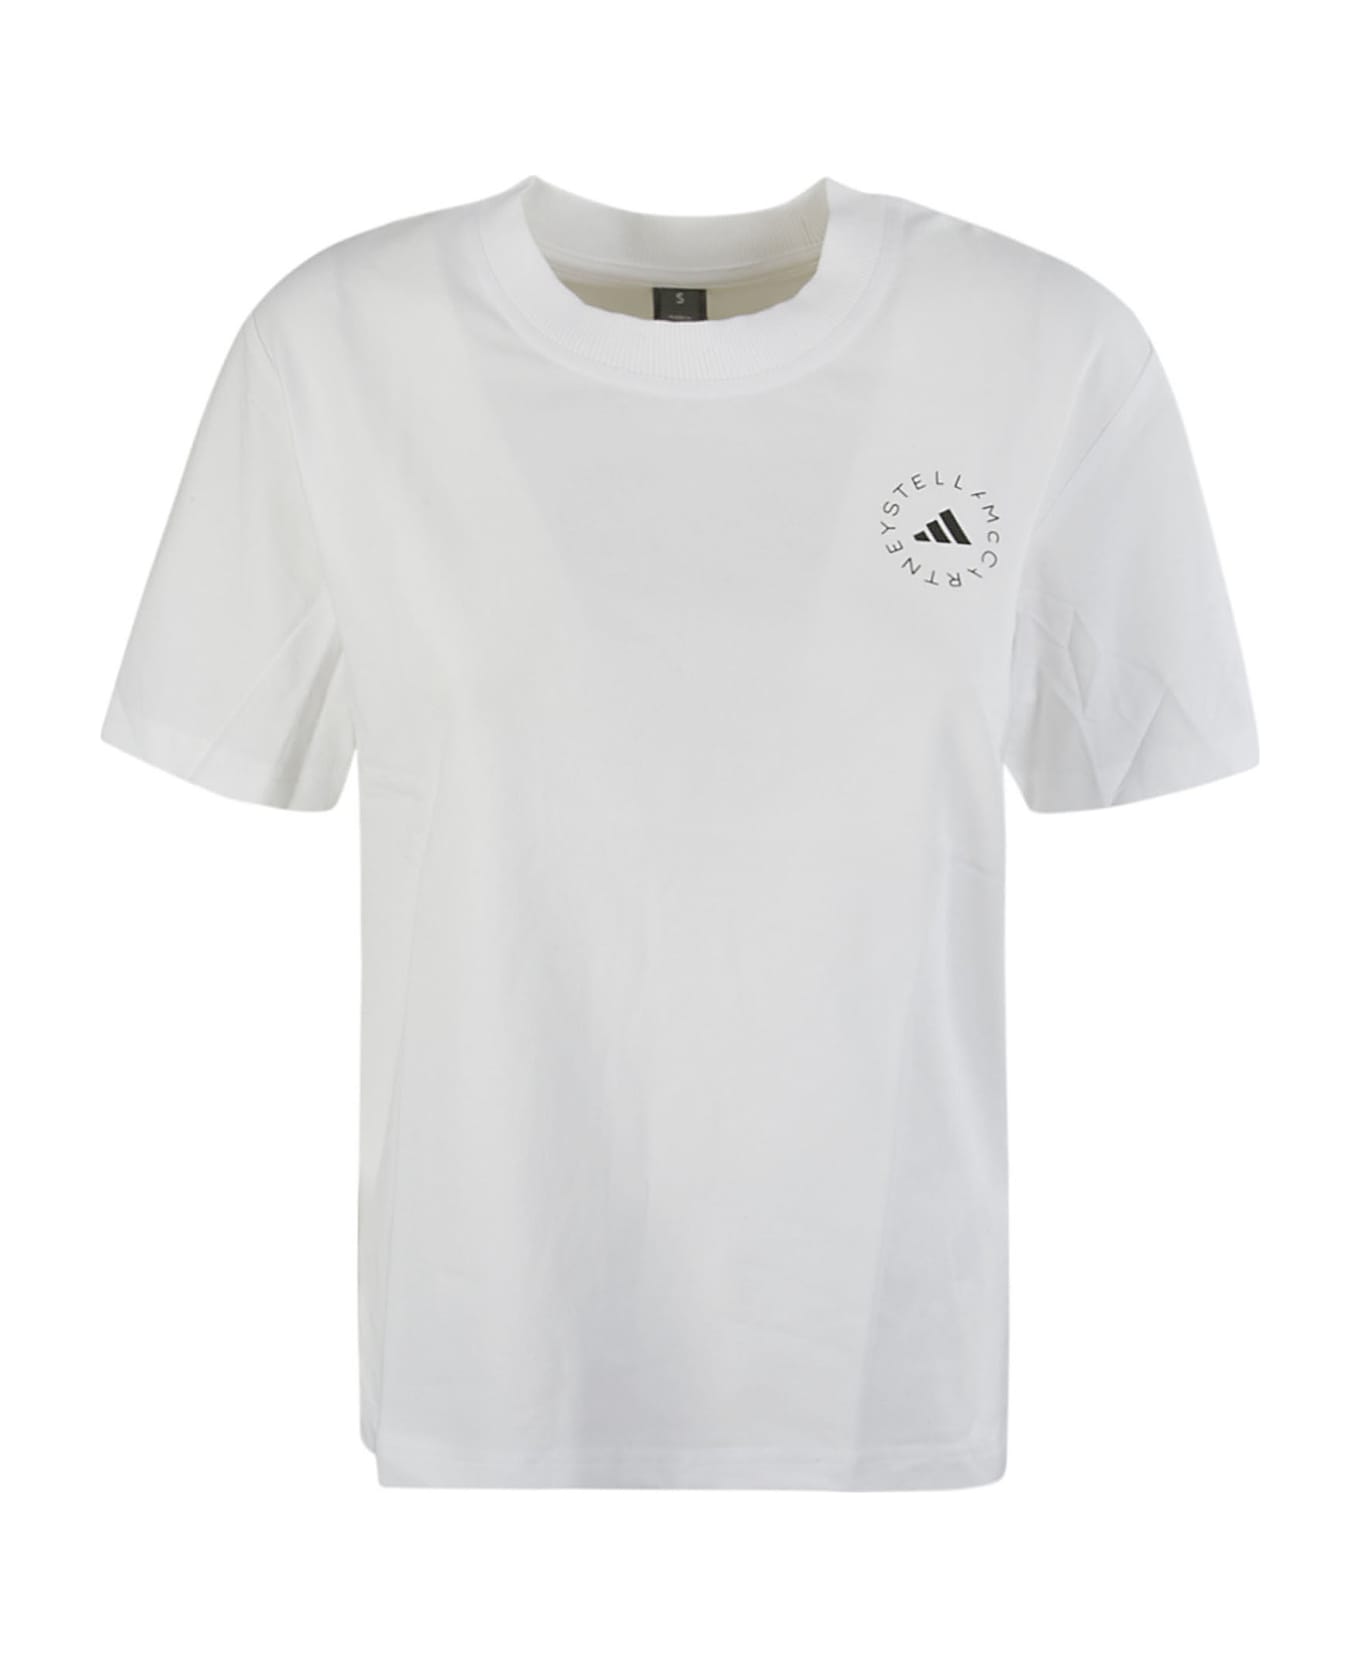 Adidas by Stella McCartney T-shirt Hr9167 - WHITE